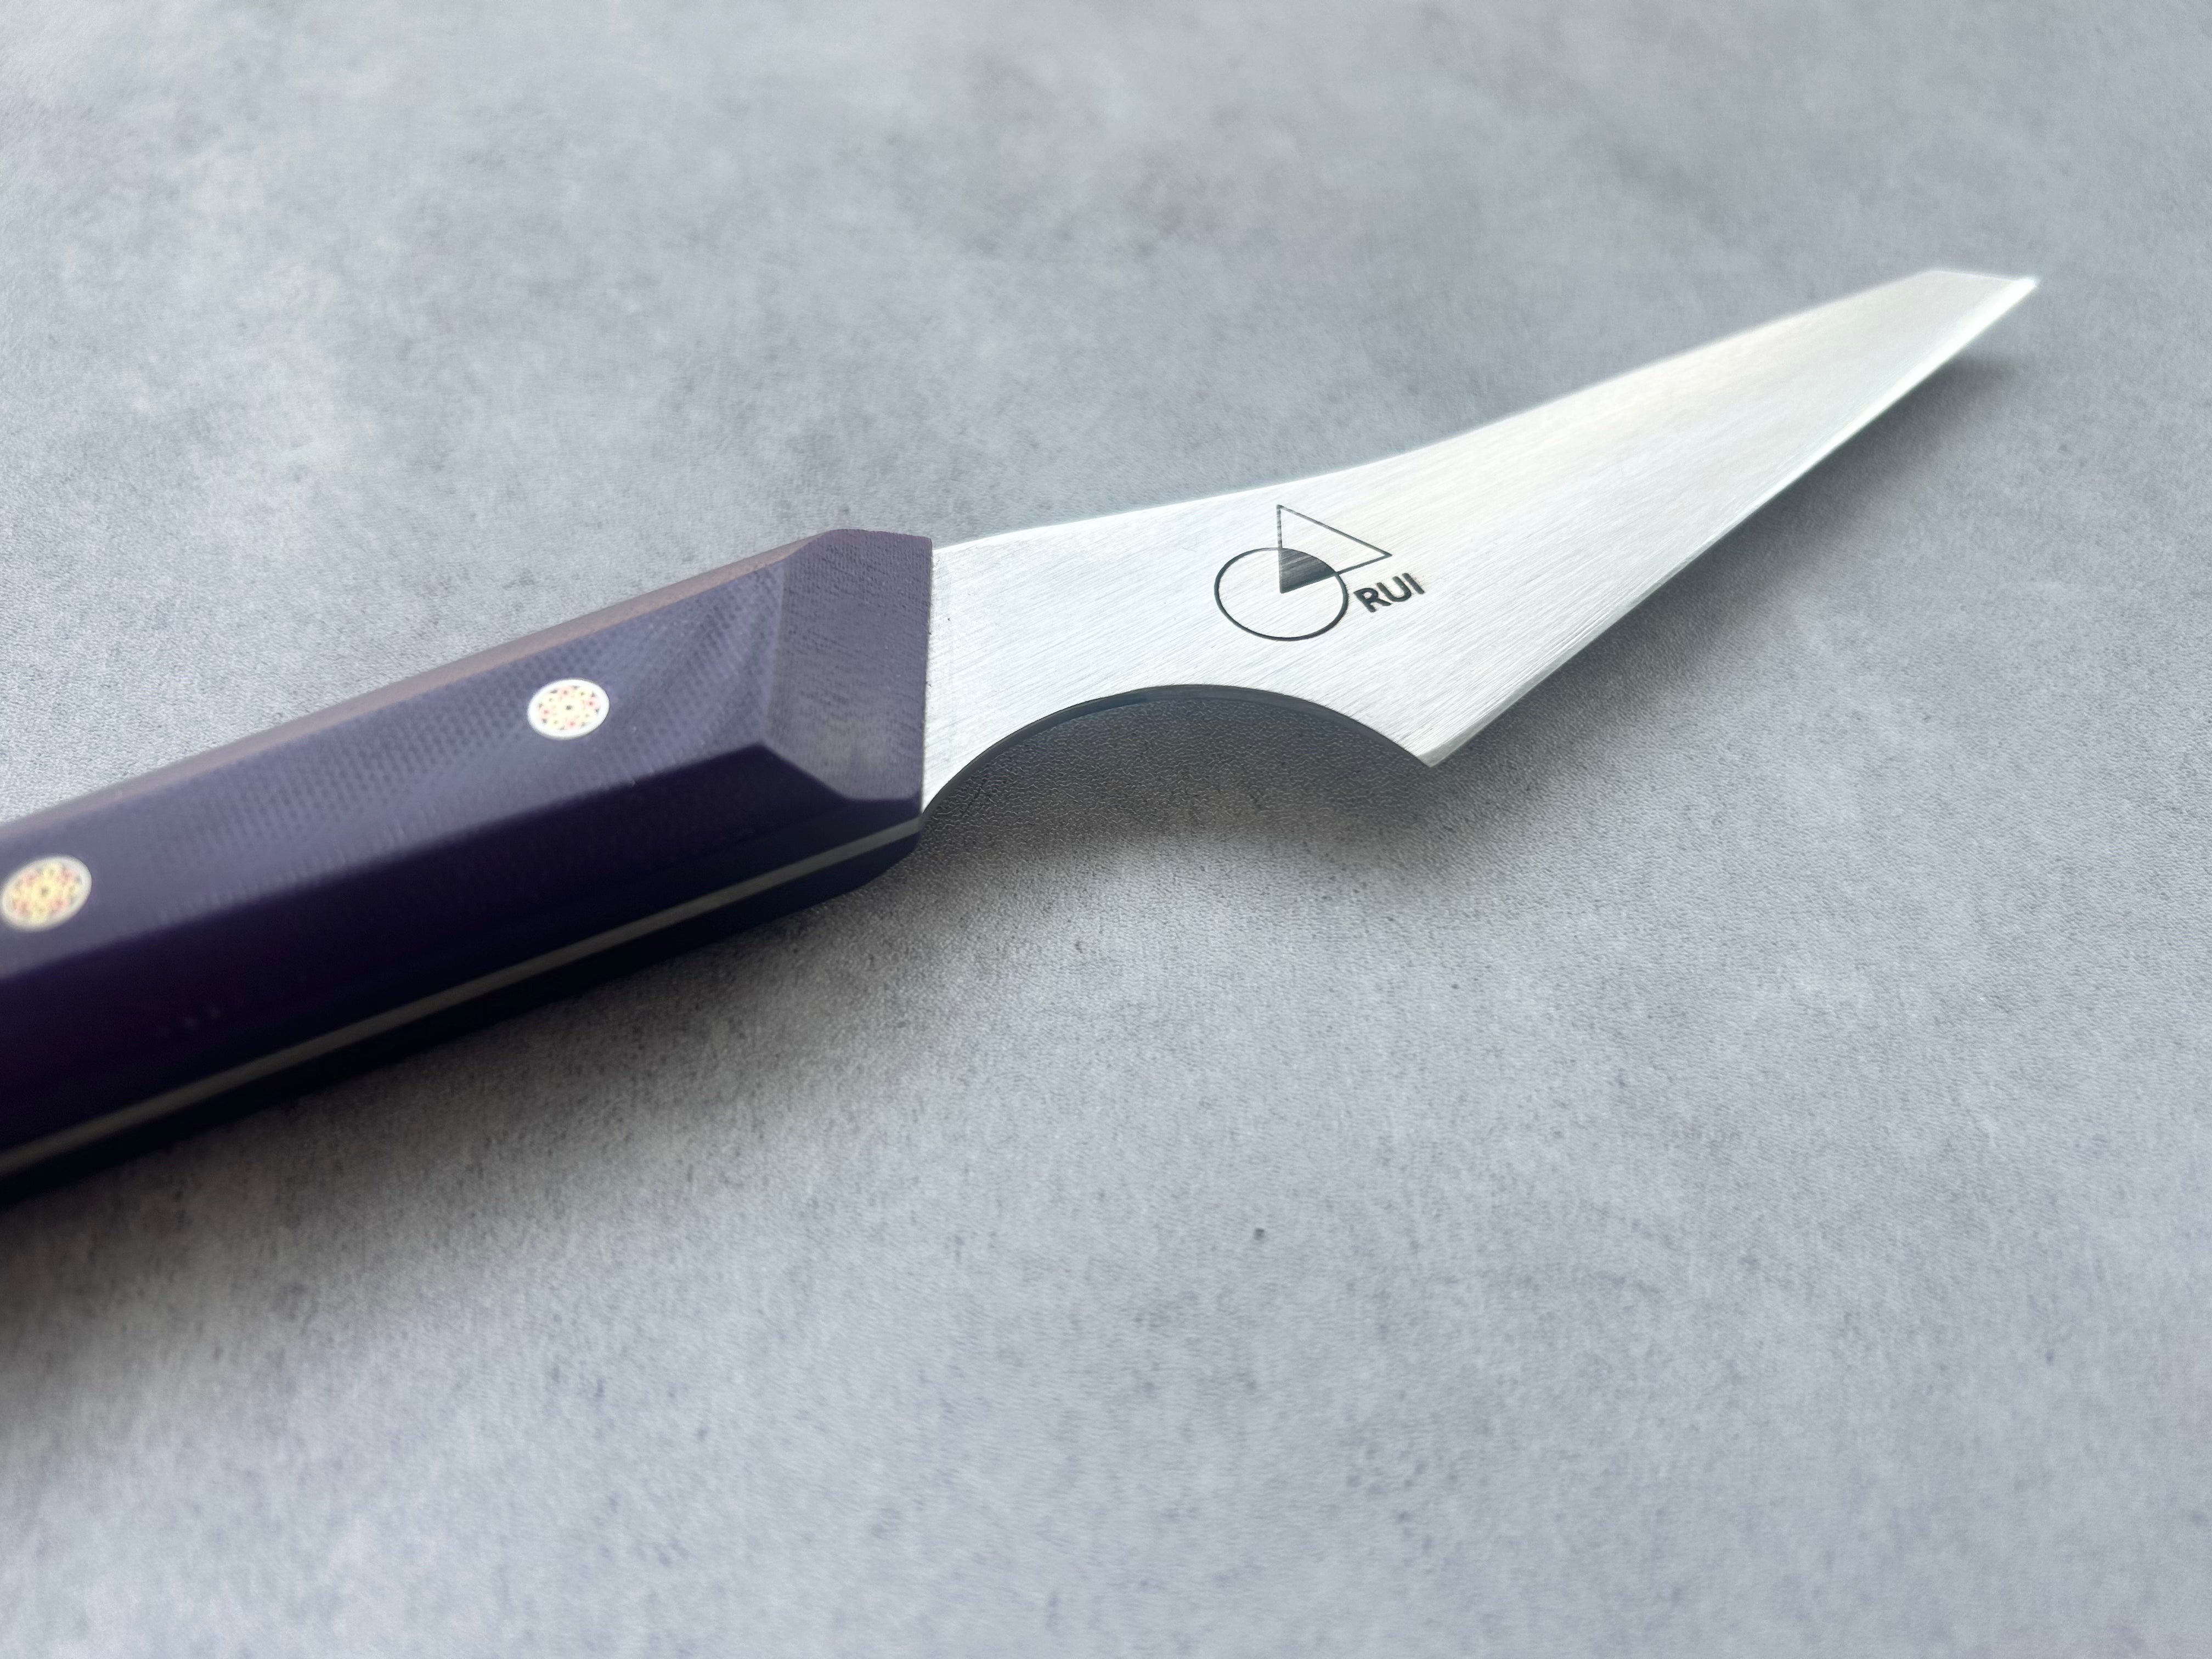 HSS Petty/Utility 'Grape' Purple G10 Handle FREE SHPPING